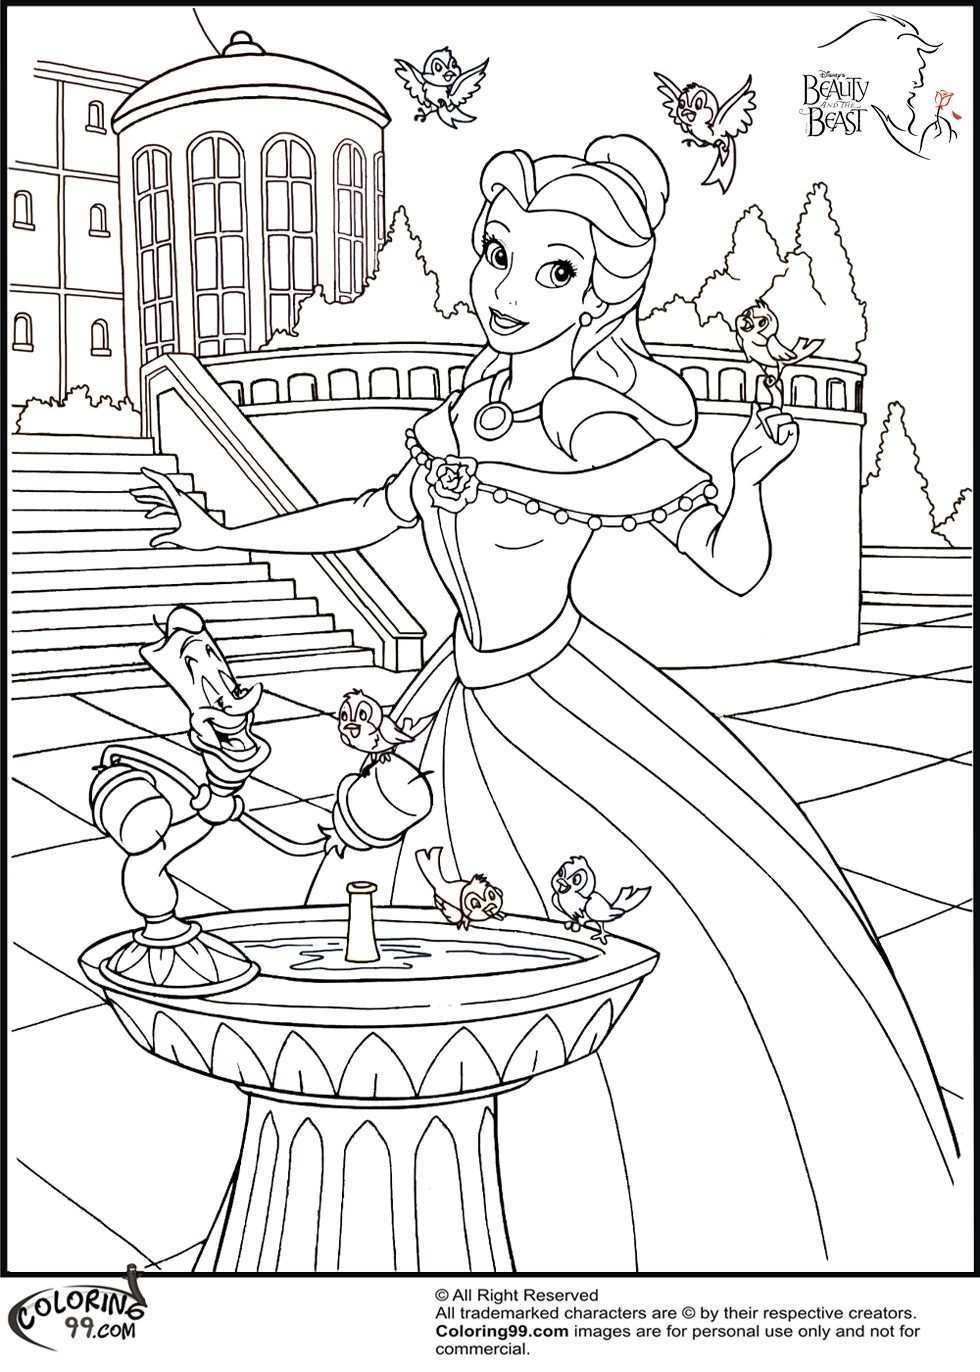 Disney Princess Belle Coloring Pages Coloring99 Com Disney Princess Coloring Pages Un